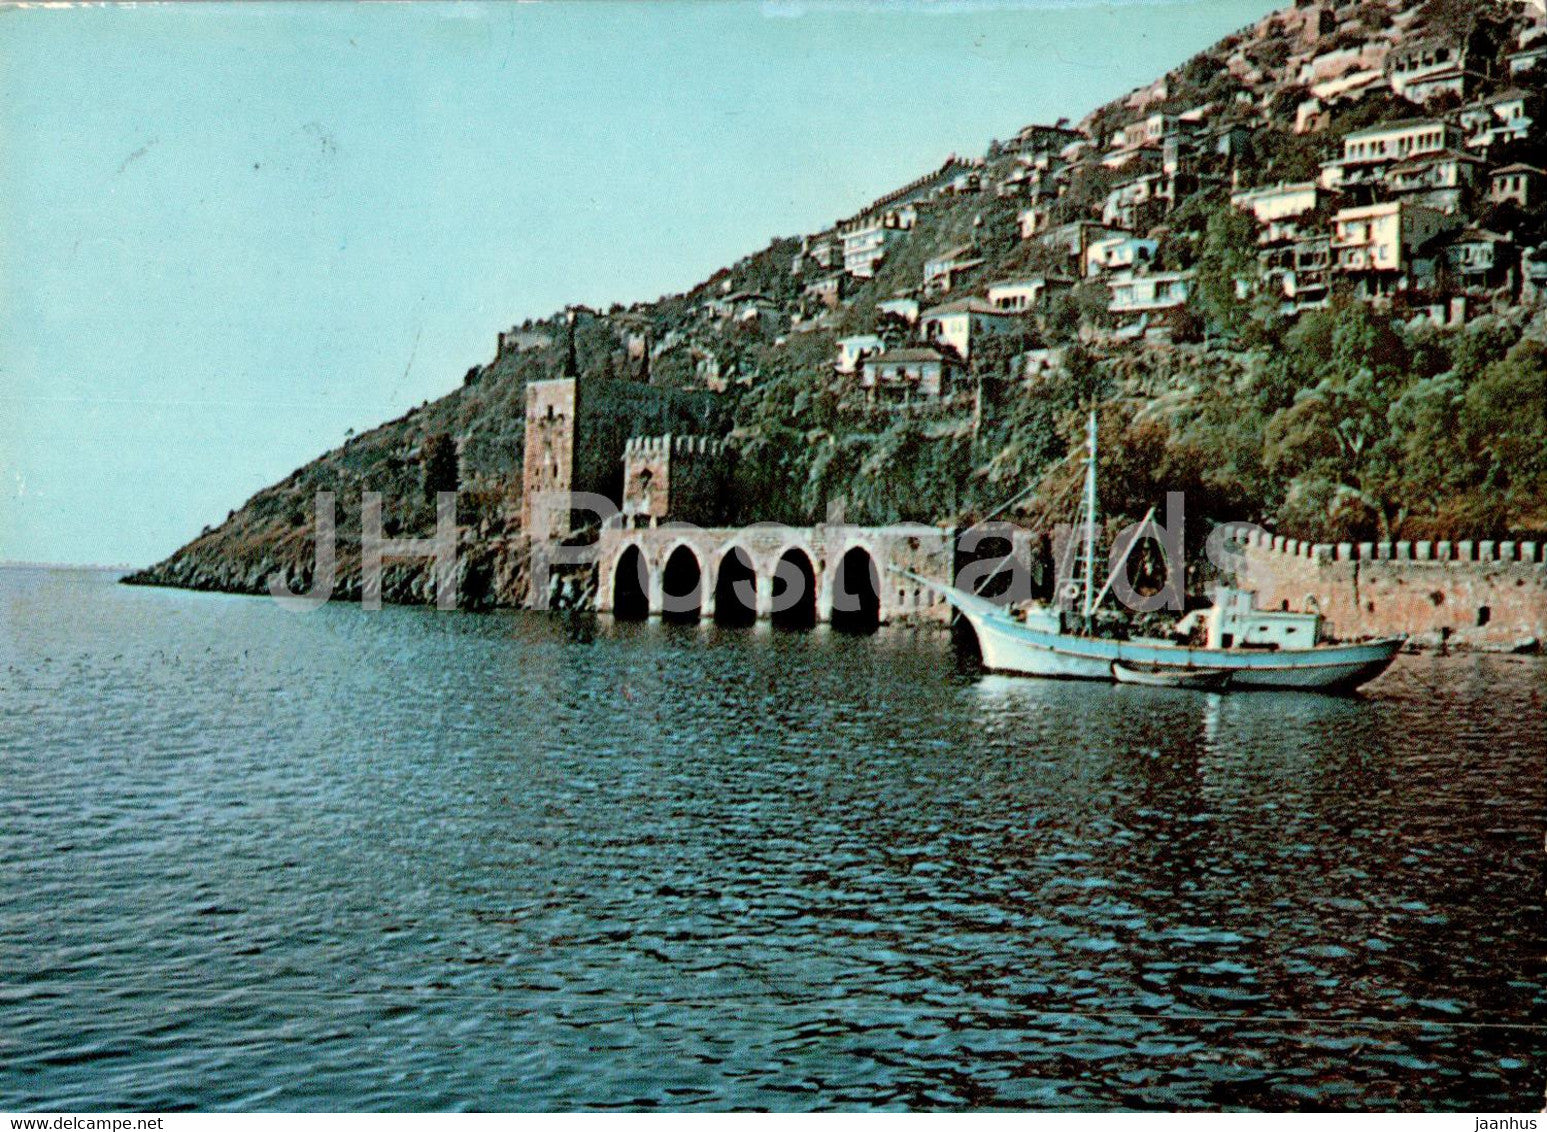 Alanya - Selcuk ship Yard in Alanya on Turkish riviera - 3 - 1970s - Turkey - used - JH Postcards